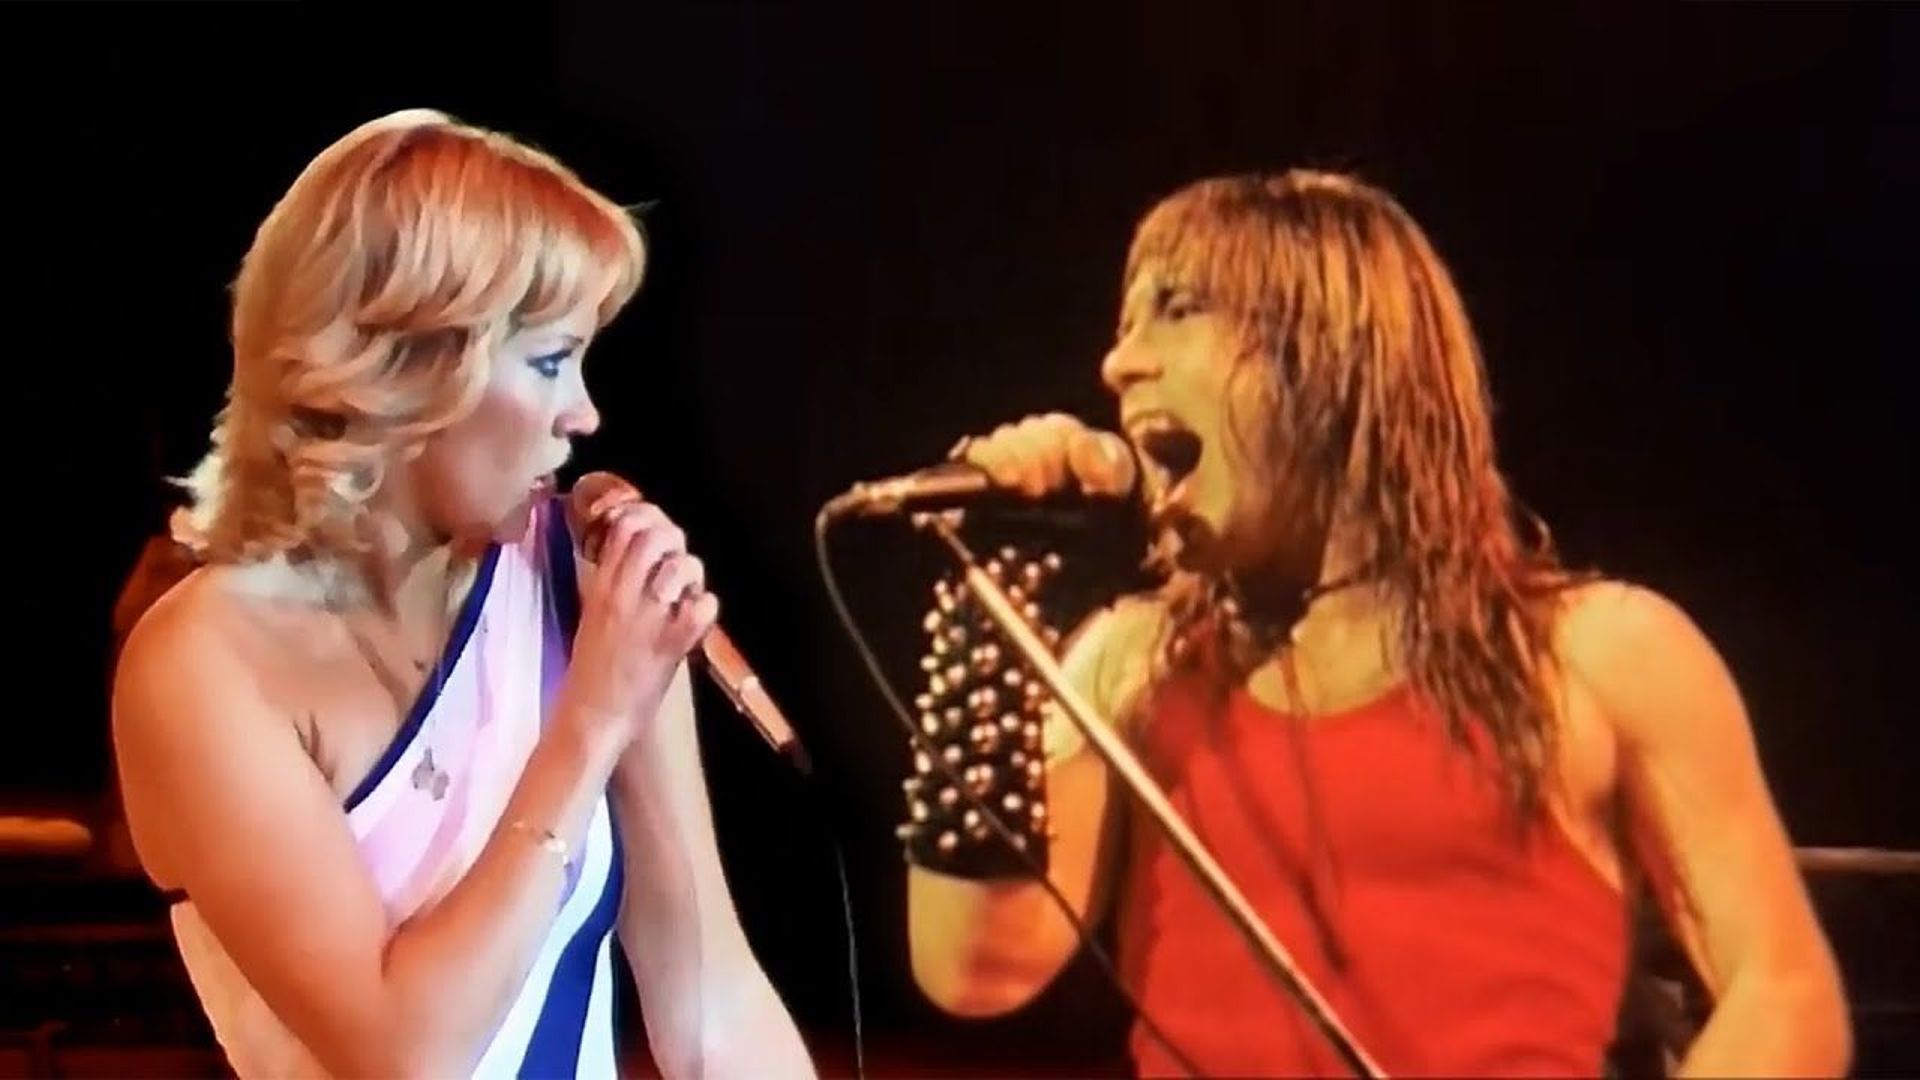 [Zapping 21] La rencontre improbable entre Iron Maiden et Abba